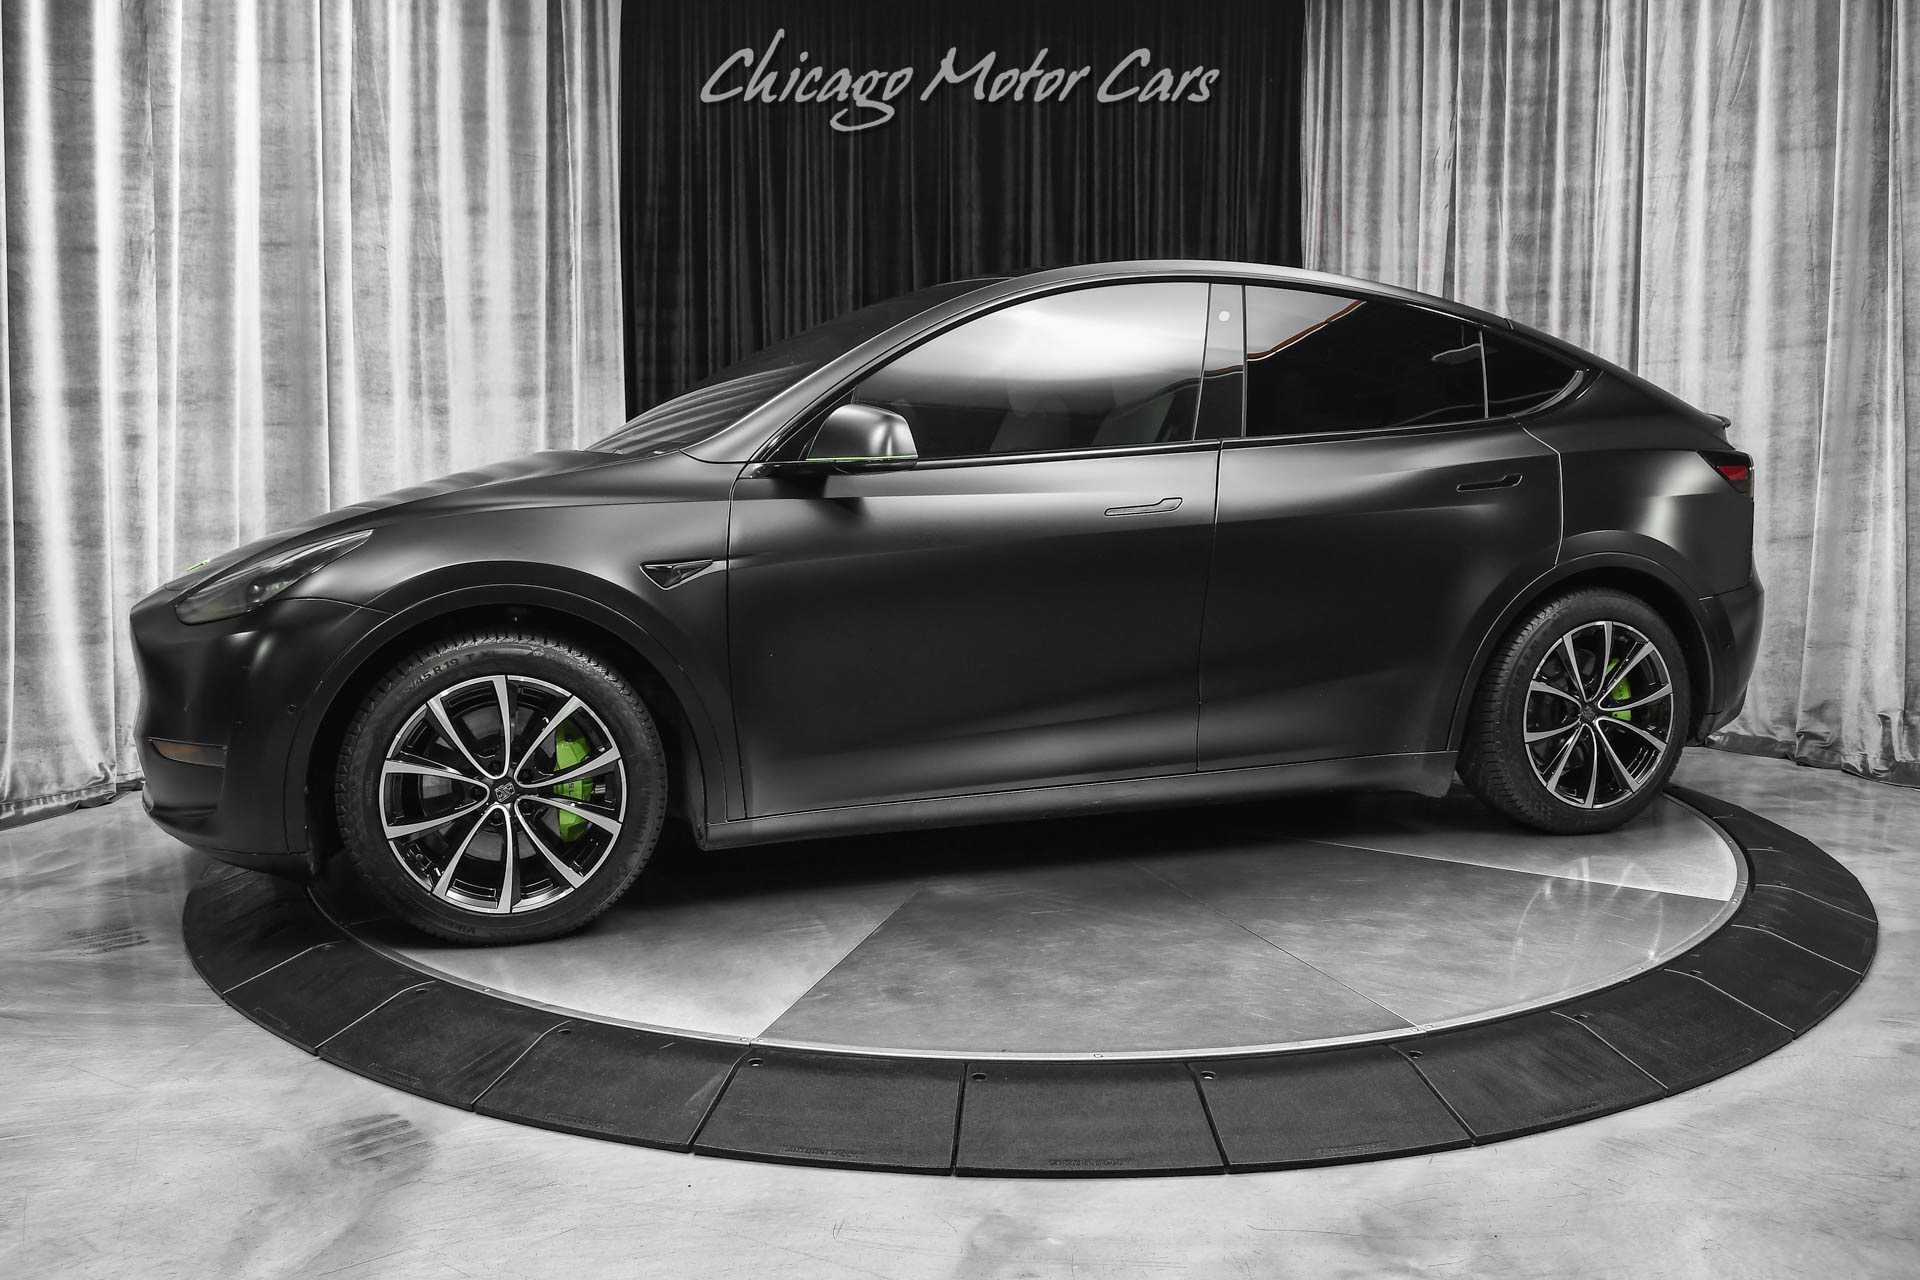 https://www.chicagomotorcars.com/imagetag/9981/main/l/Used-2020-Tesla-Model-Y-Long-Range-AWD-SUV-FULL-Self-Driving-Matte-Black-Low-Miles-LOADED.jpg